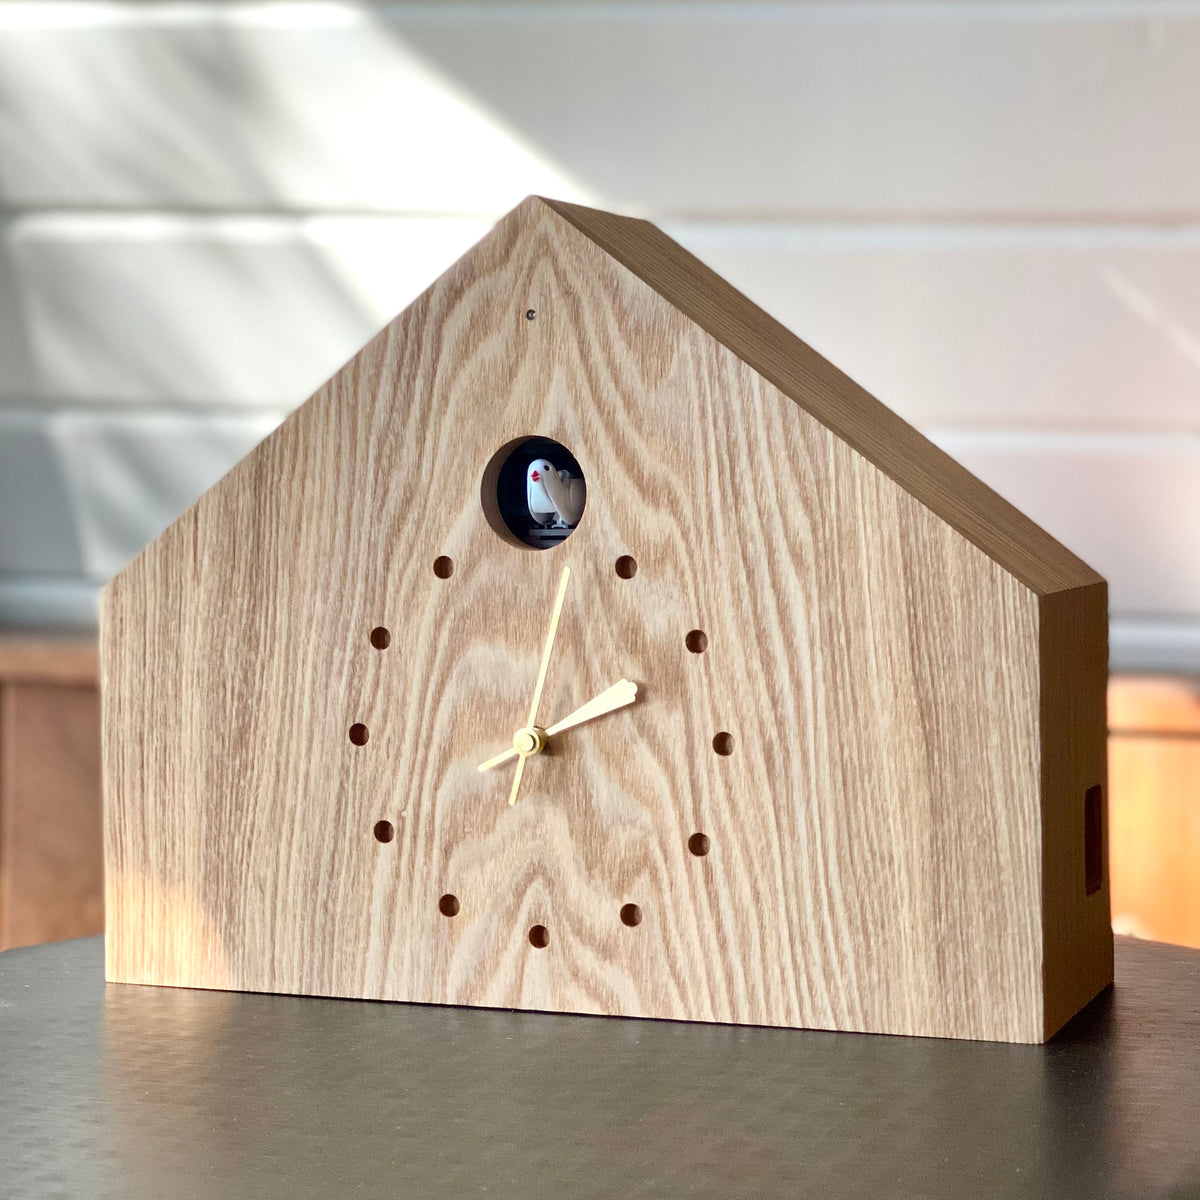 Lifestyle photo of cuckoo clock.